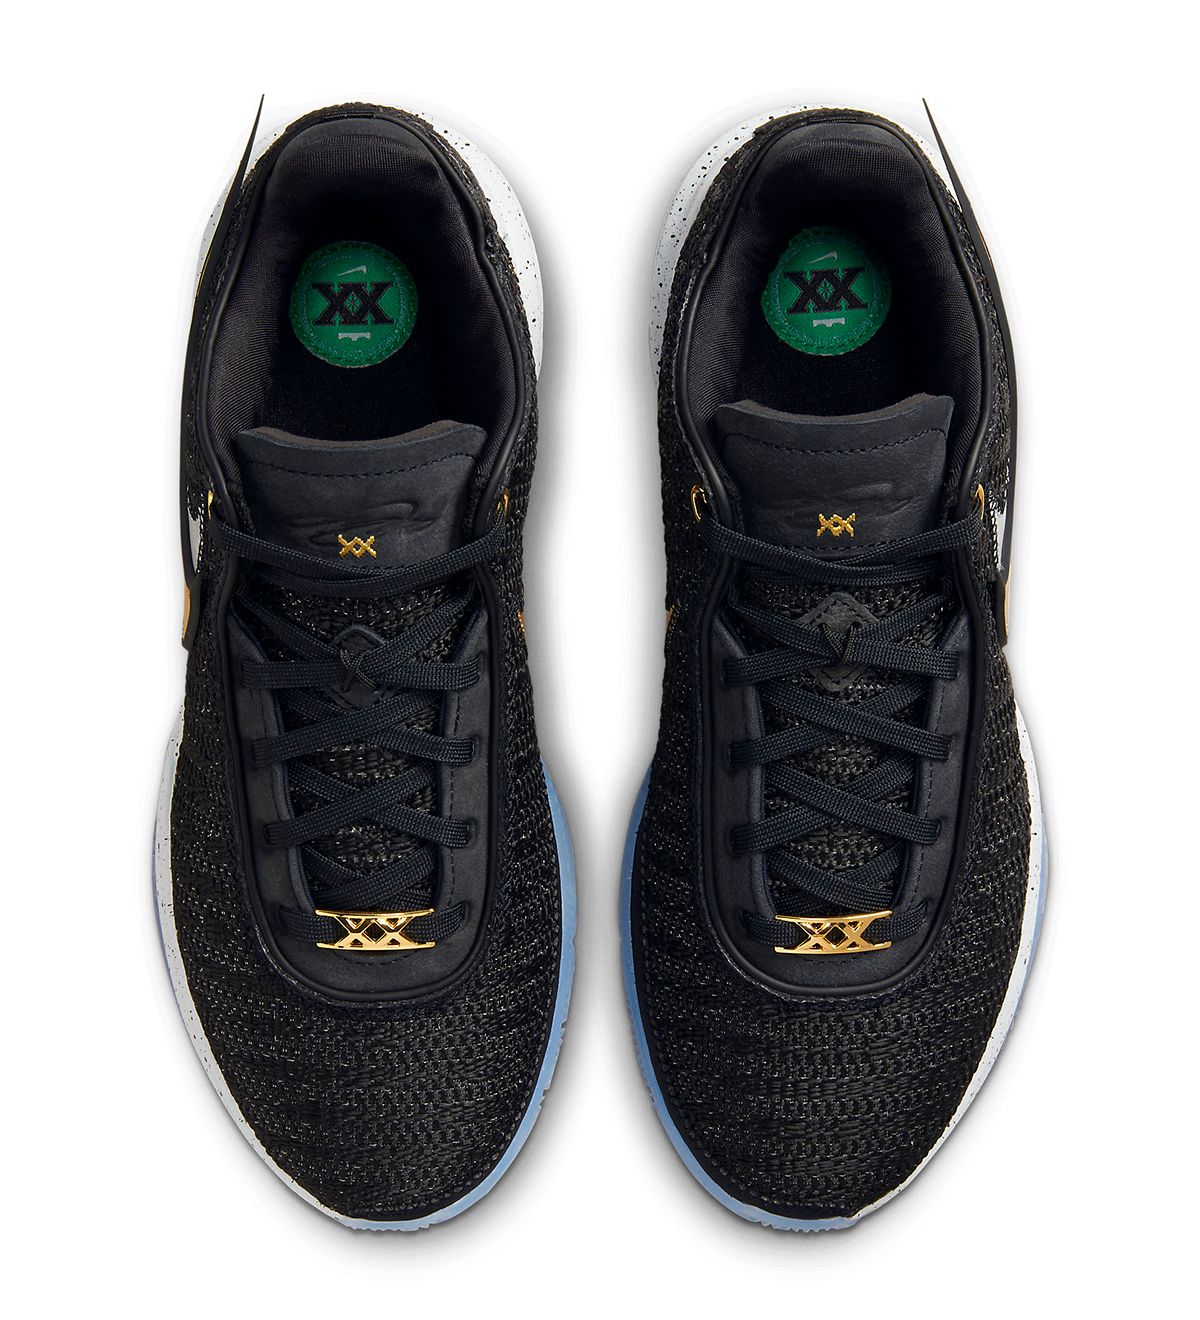 Nike LeBron 20 “Black/Gold” Drops April 6 | House of Heat°